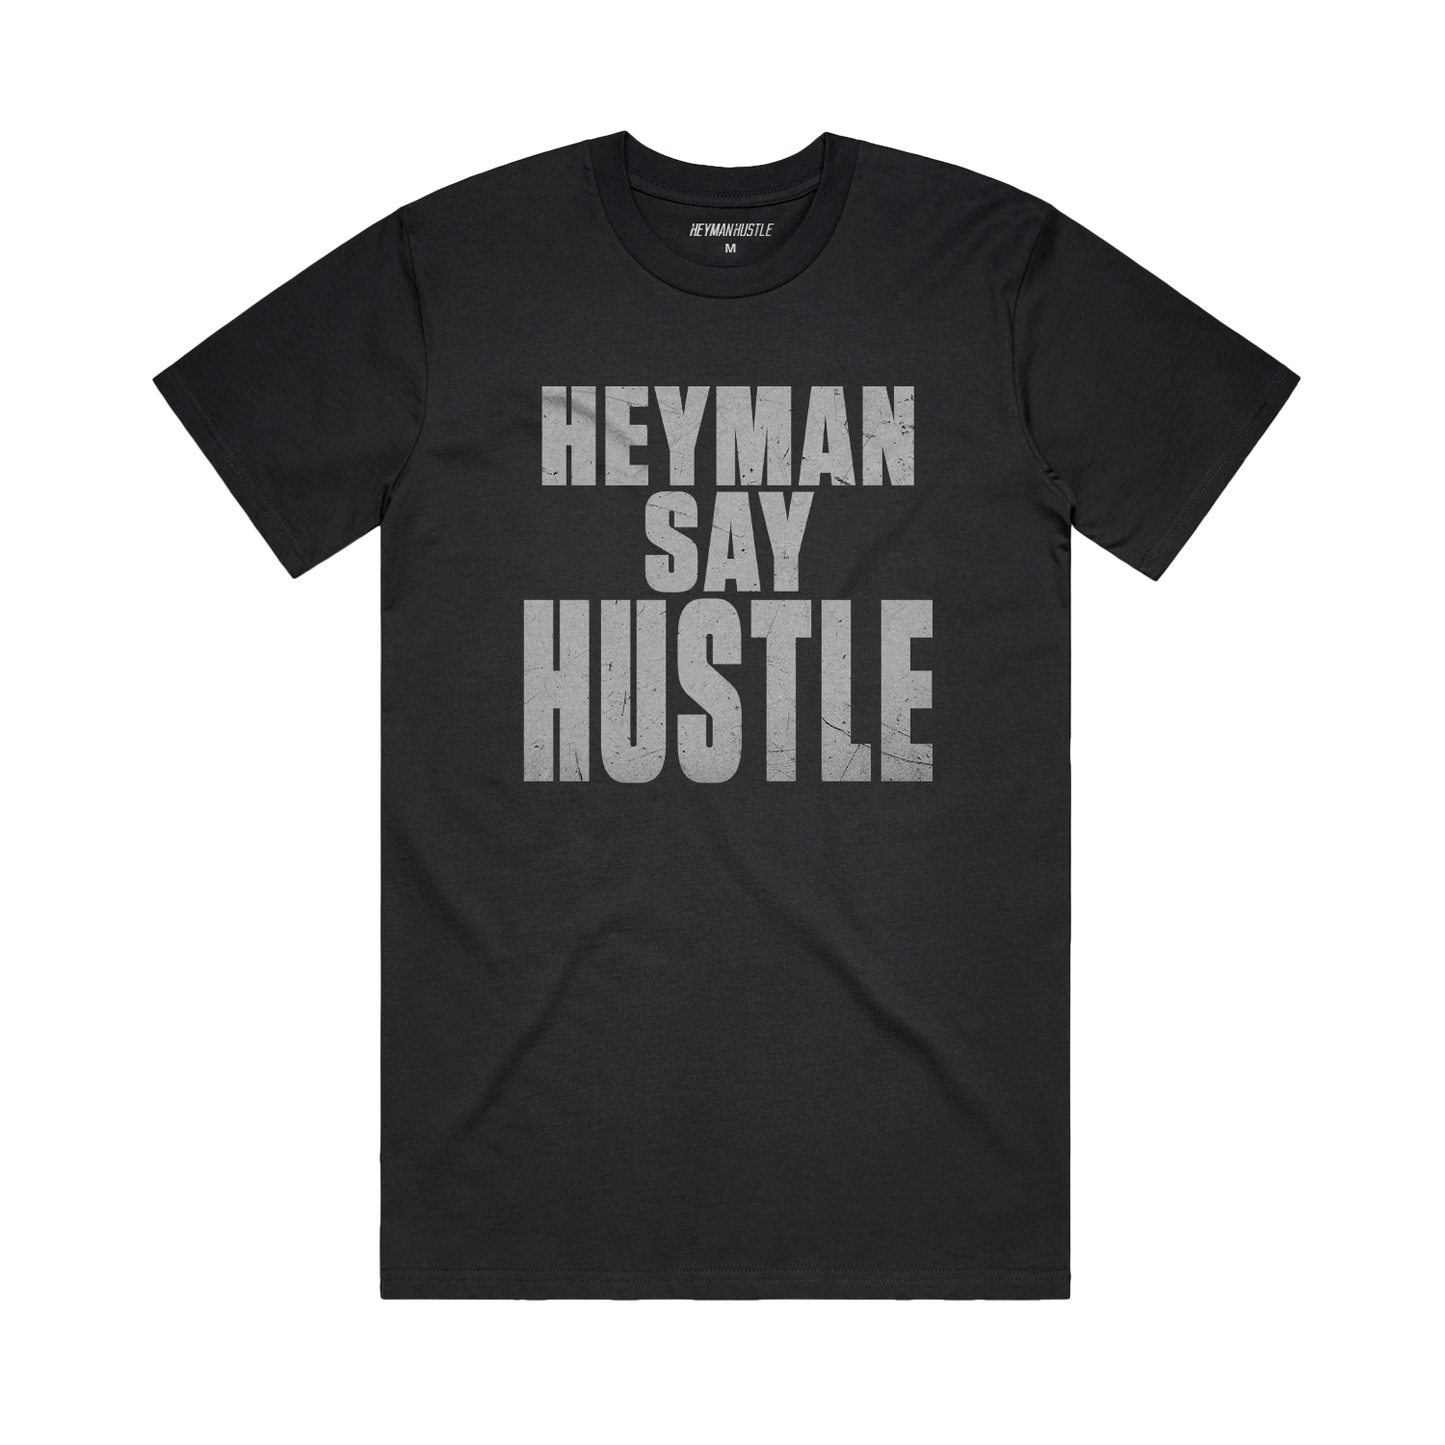 Women's "Heyman Say Hustle" T-Shirt